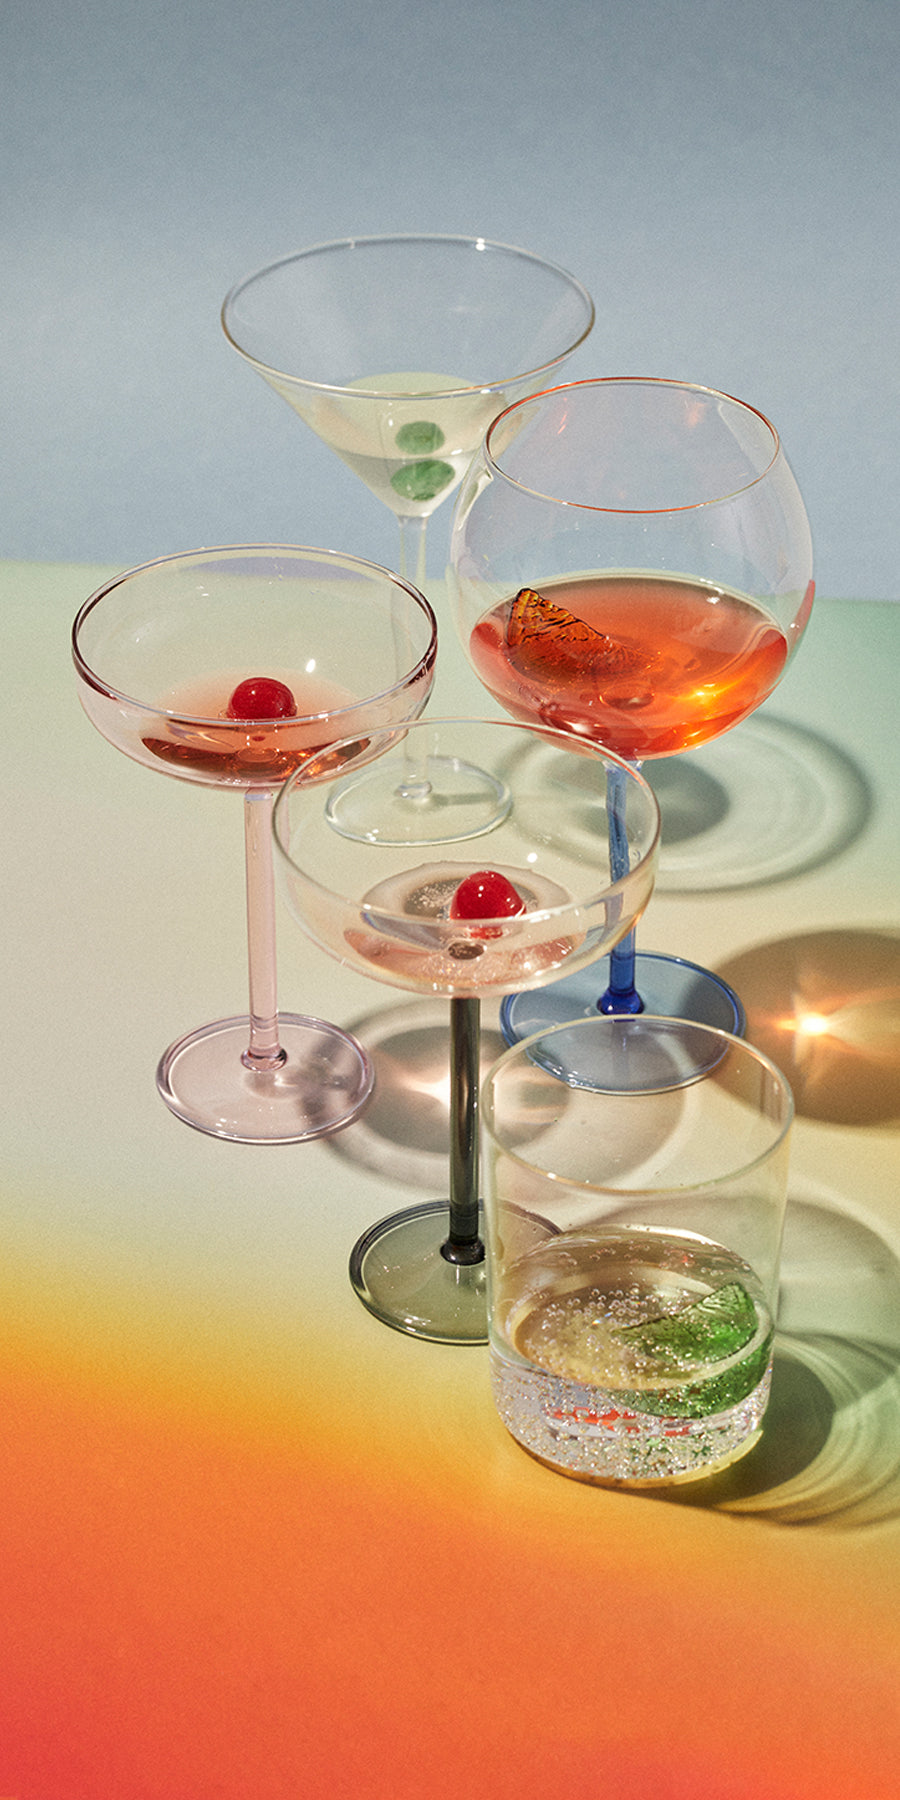 Set of 4 Small Smoke Coloured Wine Glasses 